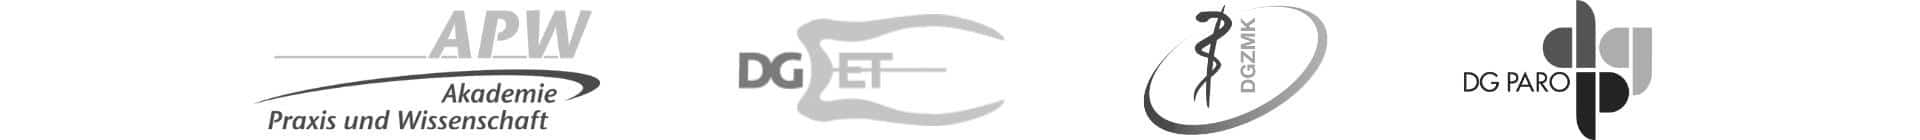 Orcun - Mitglieder Logos